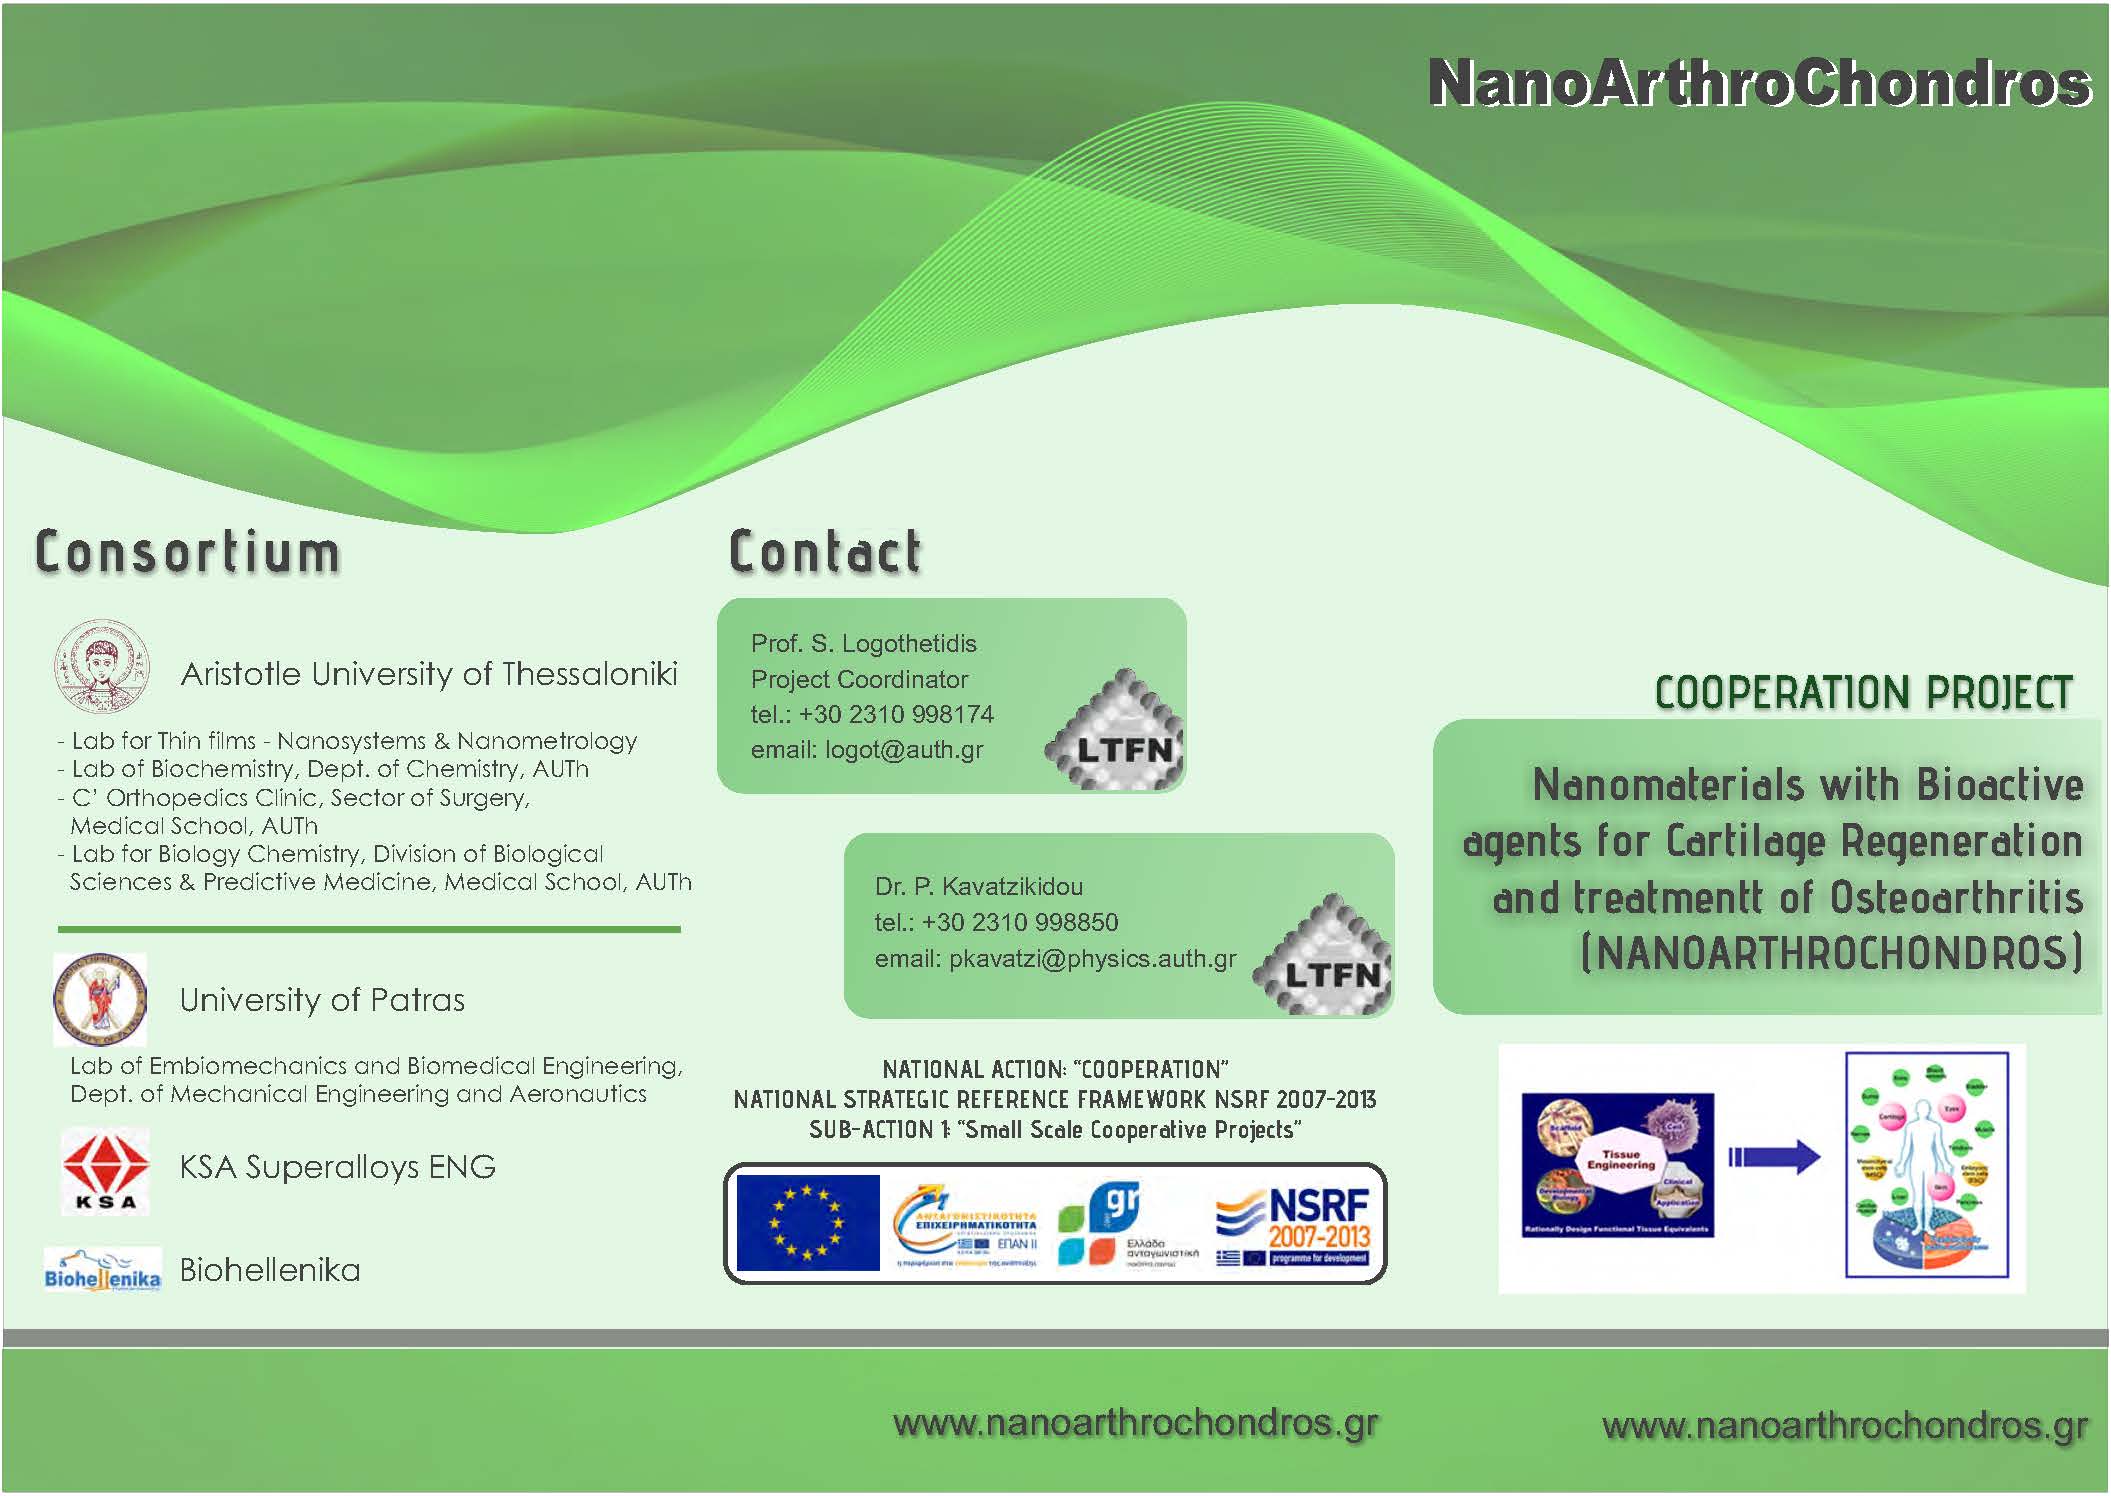 nanoarthrochondrosf low